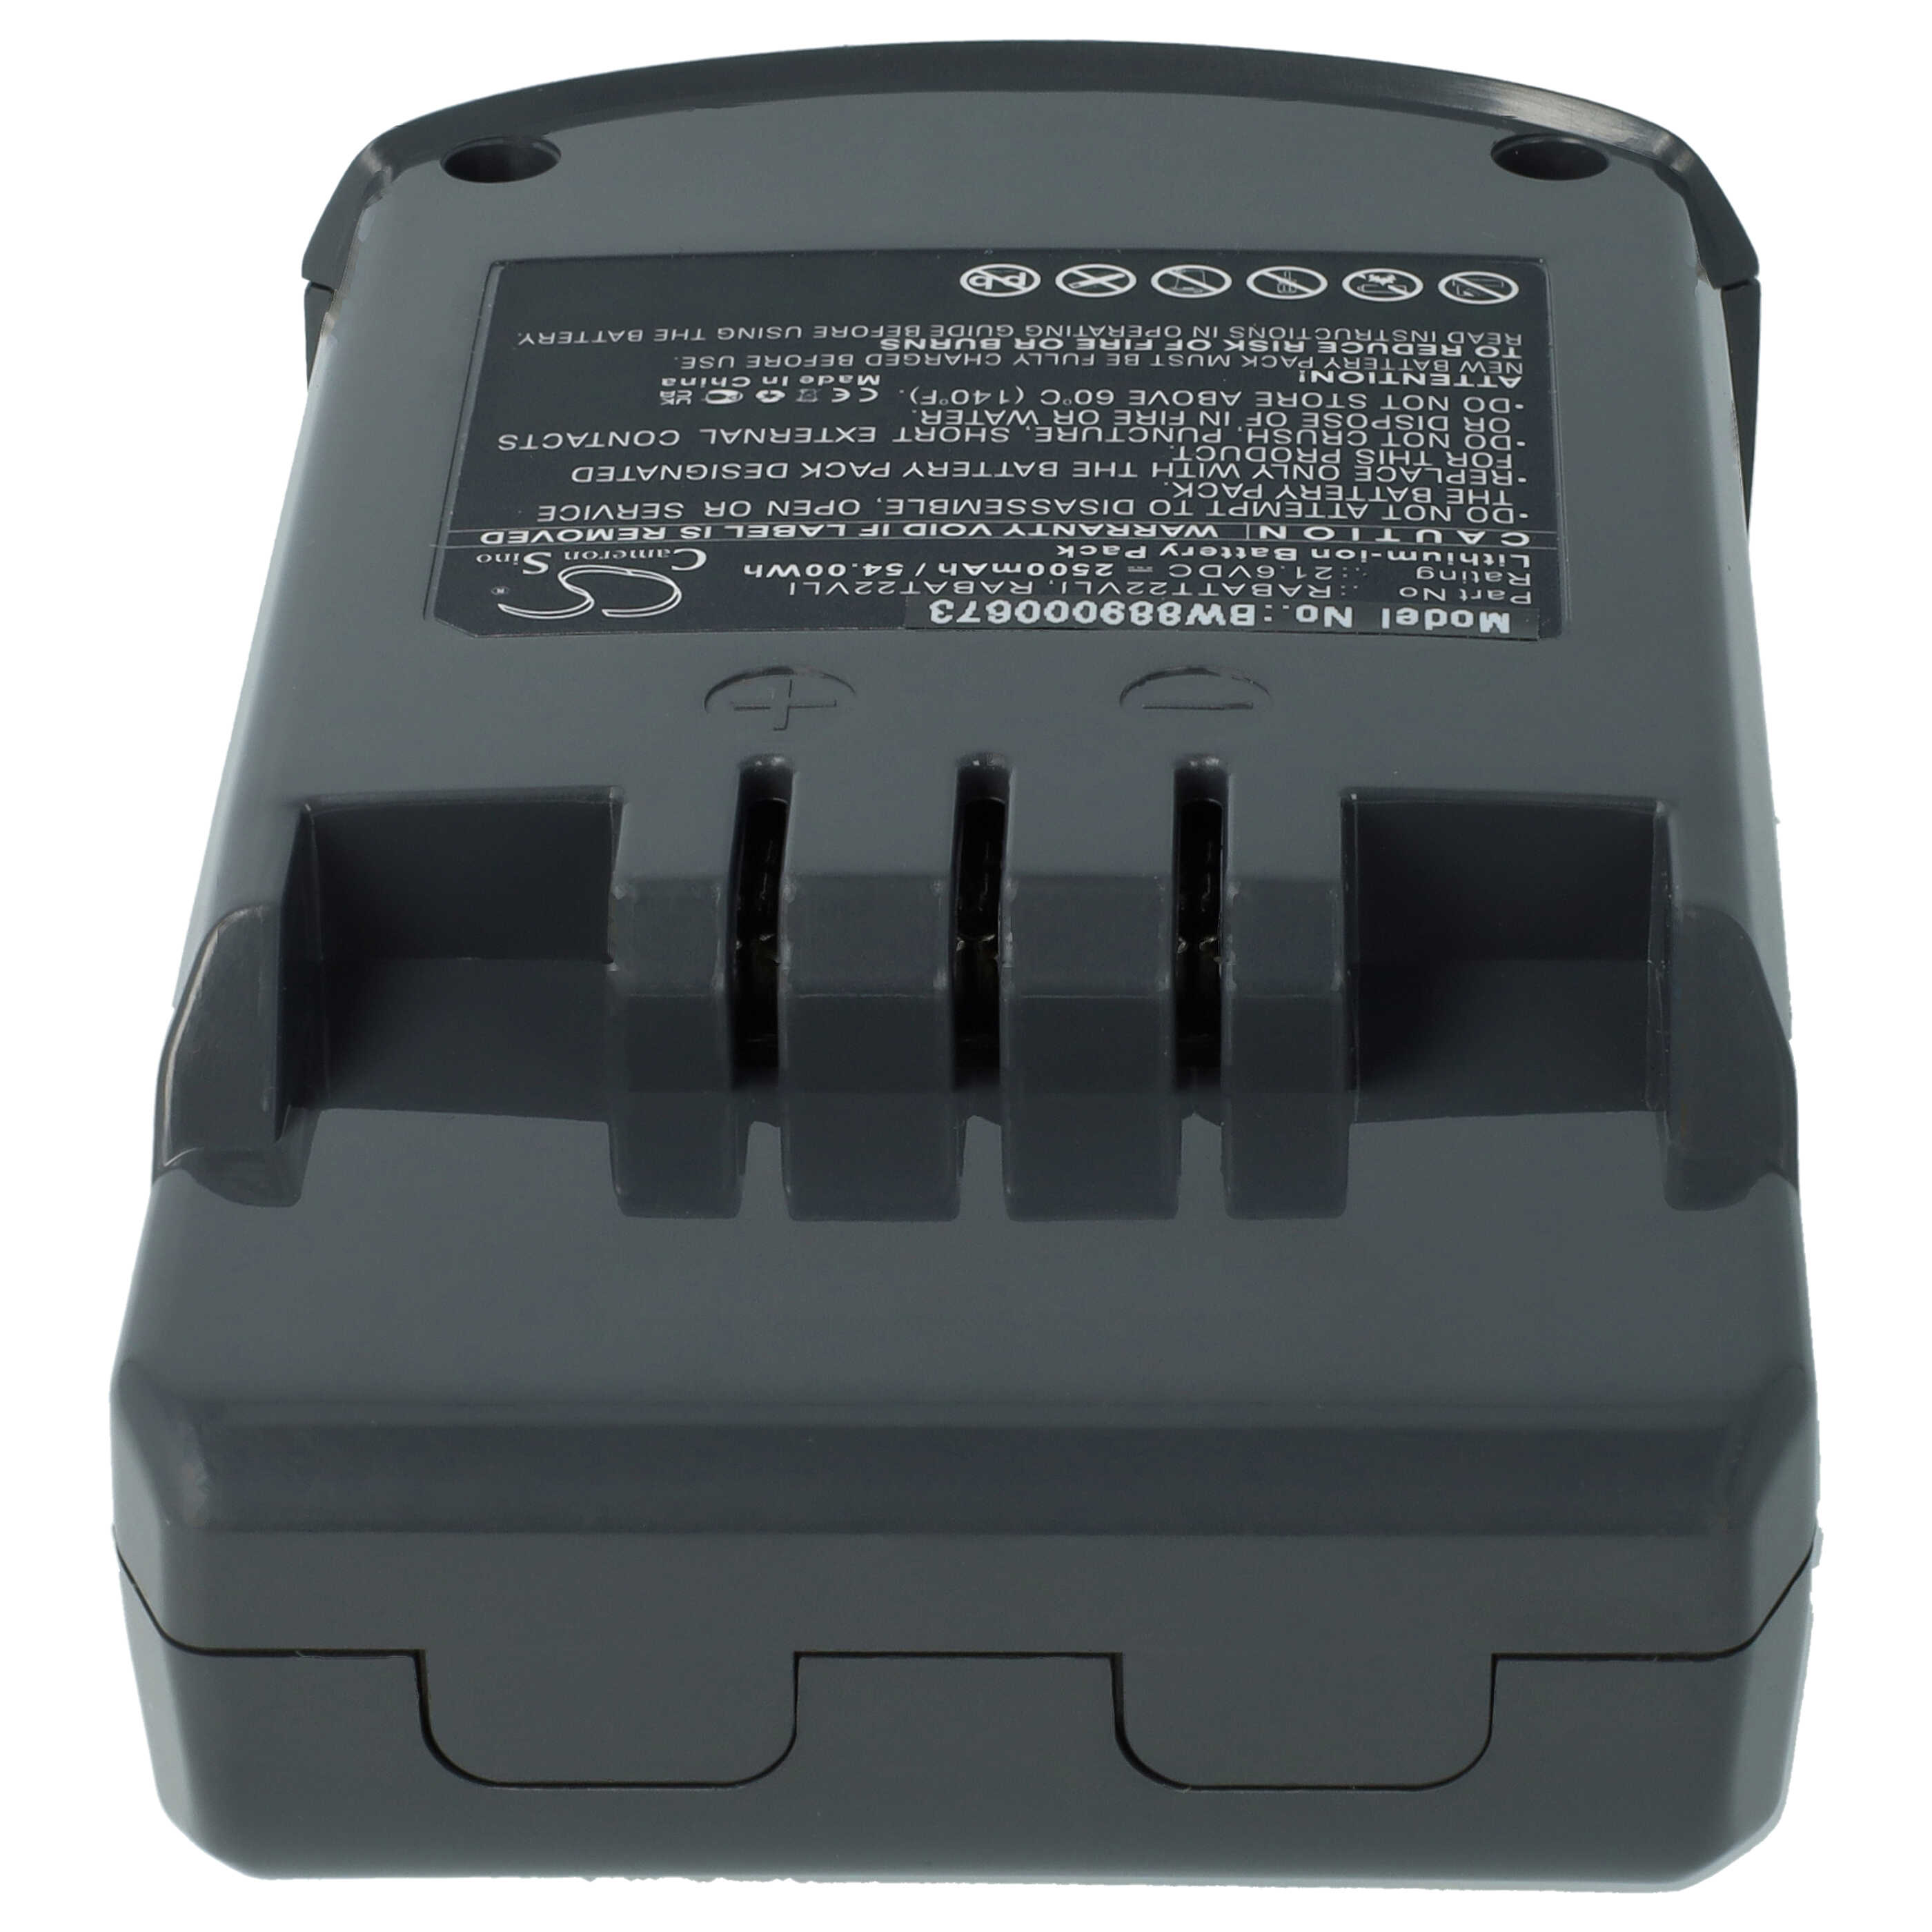 Akumulator do odkurzacza zamiennik Hoover RABAT22VLI, 6.20.40.01-0, 48023809 - 2500 mAh 21,6 V Li-Ion